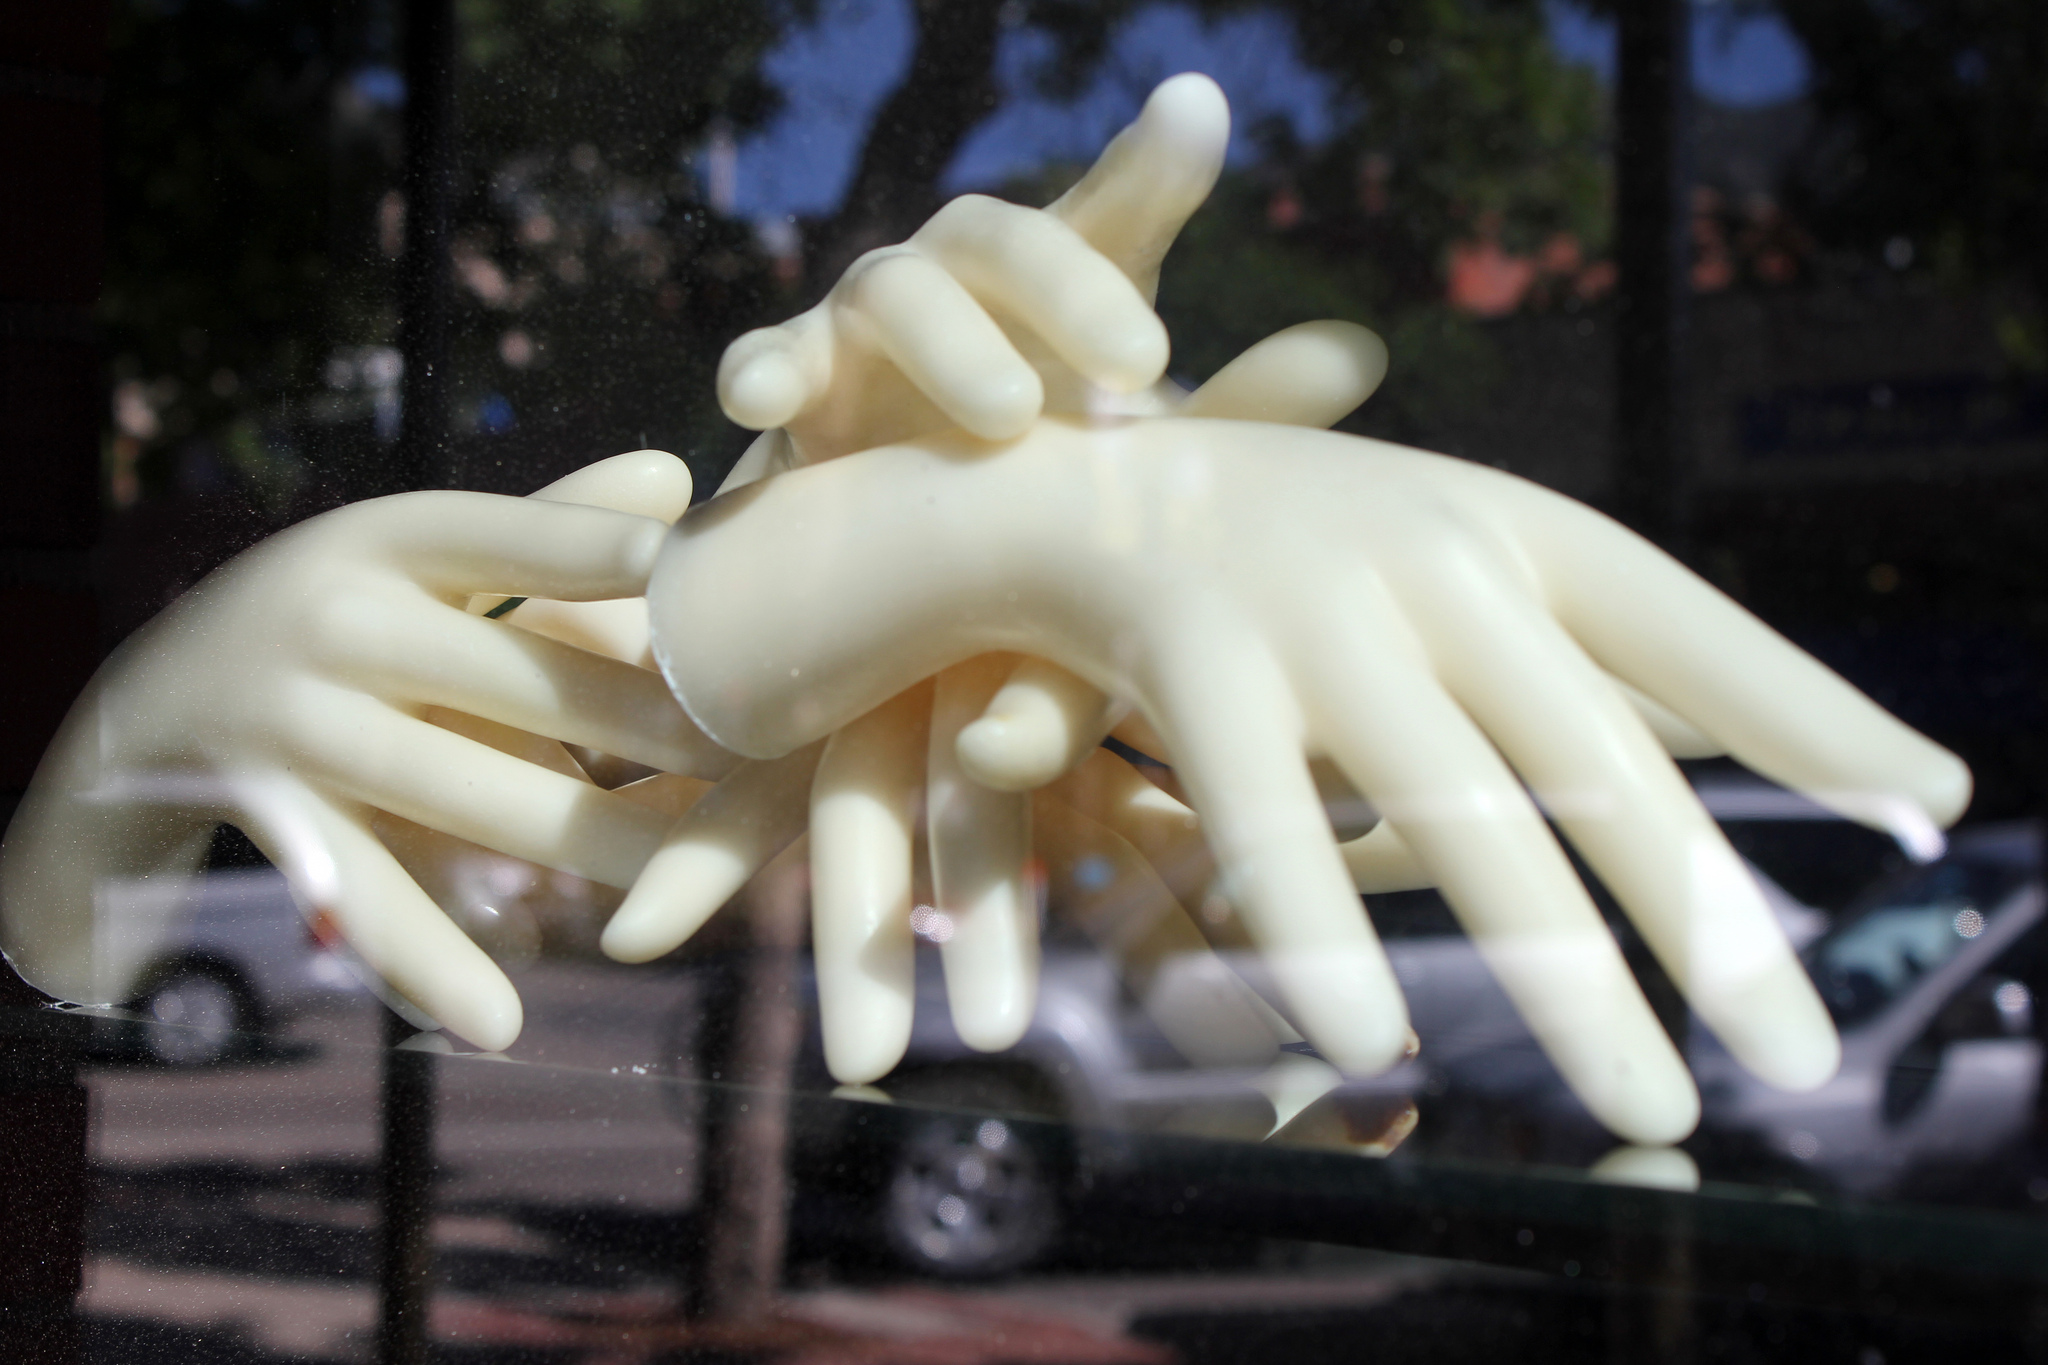 Загребущие руки (инсталляция) [(cc) Quinn Dombrowski]